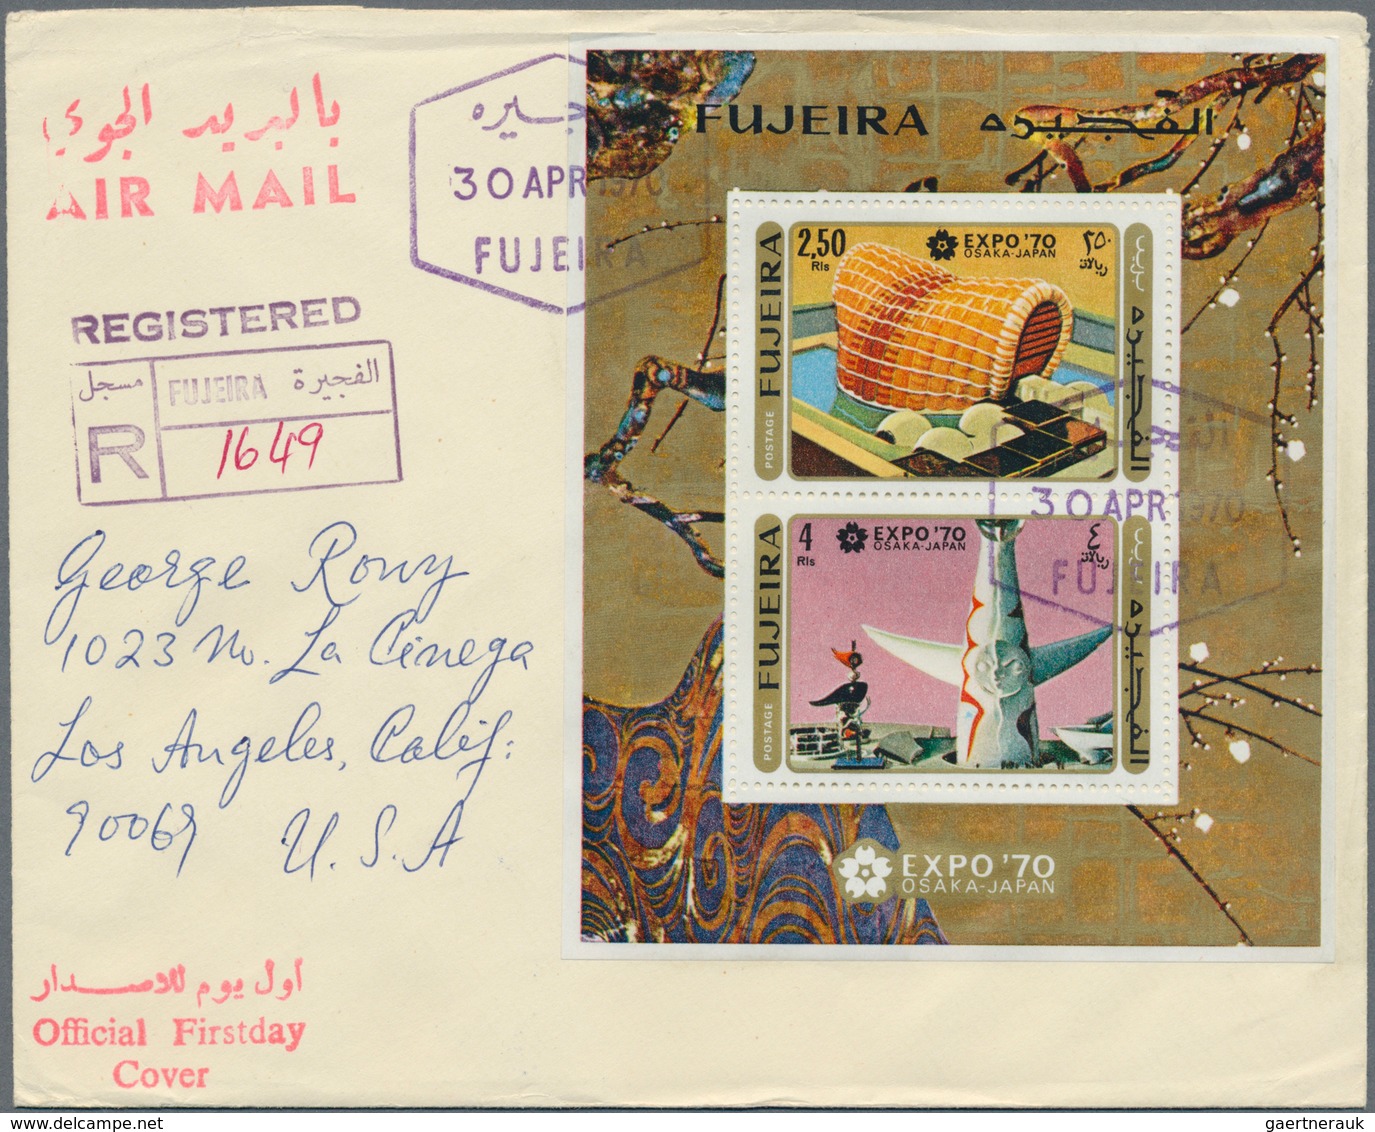 Asien: 1964/1997, Gulf states/Arabian Peninsula, assortment of 32 covers/cards, comprising e.g. Qata